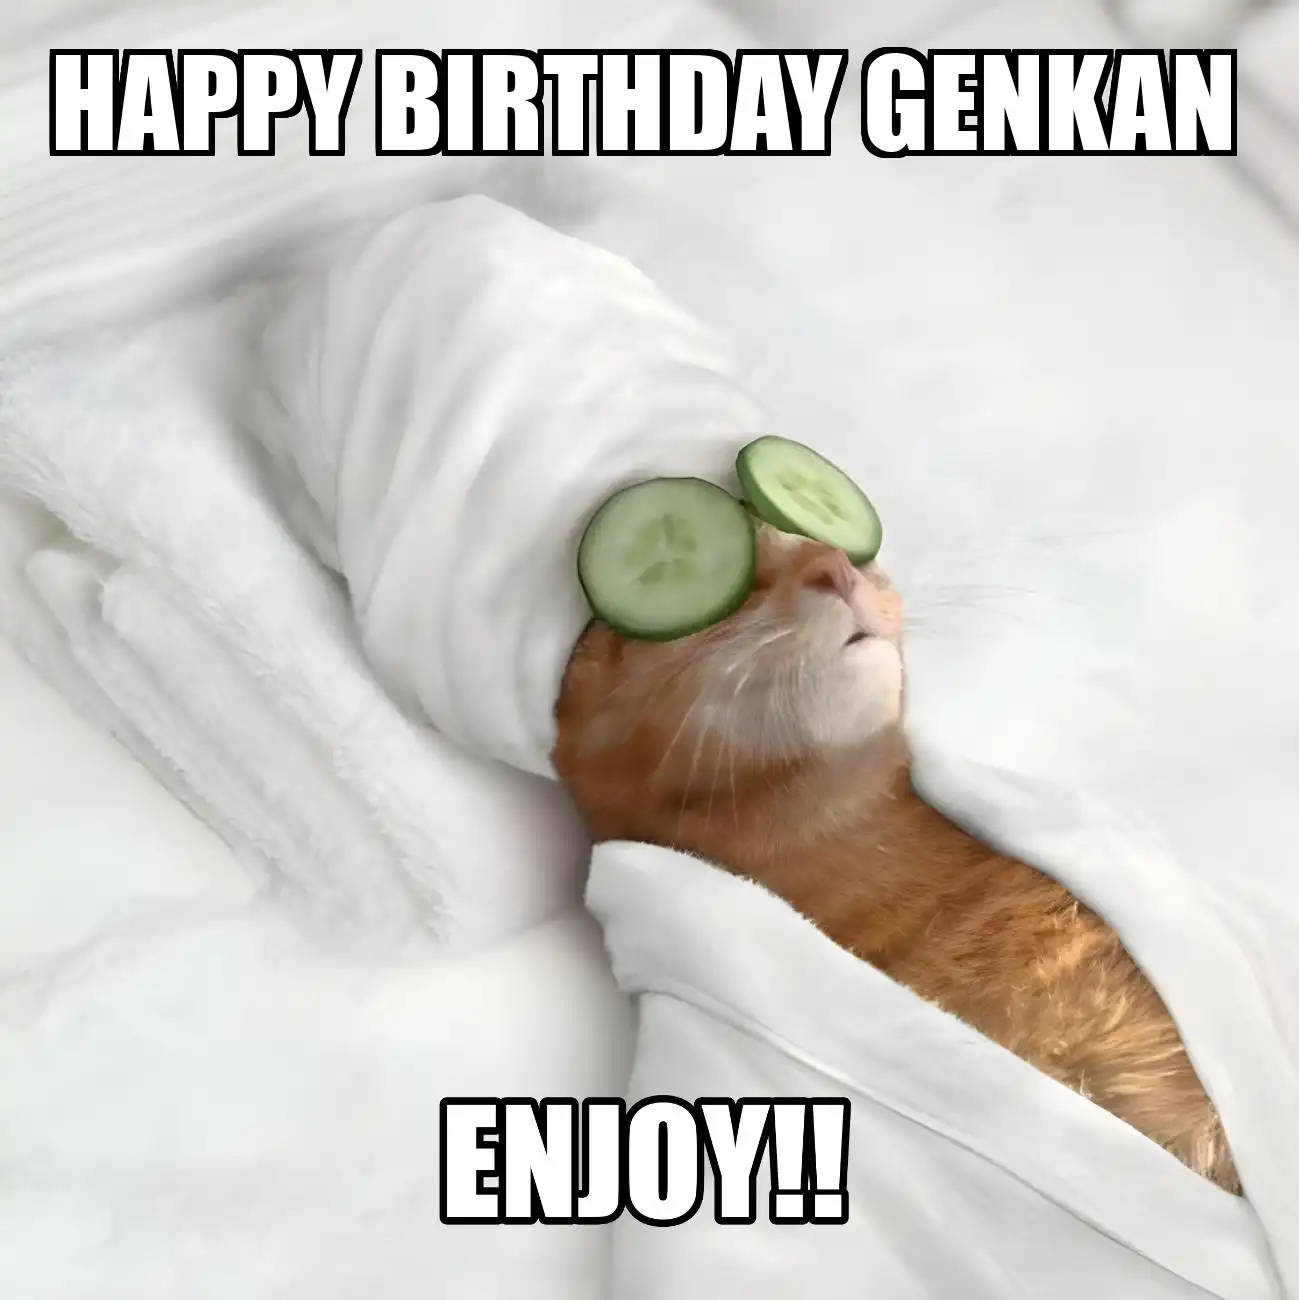 Happy Birthday Genkan Enjoy Cat Meme